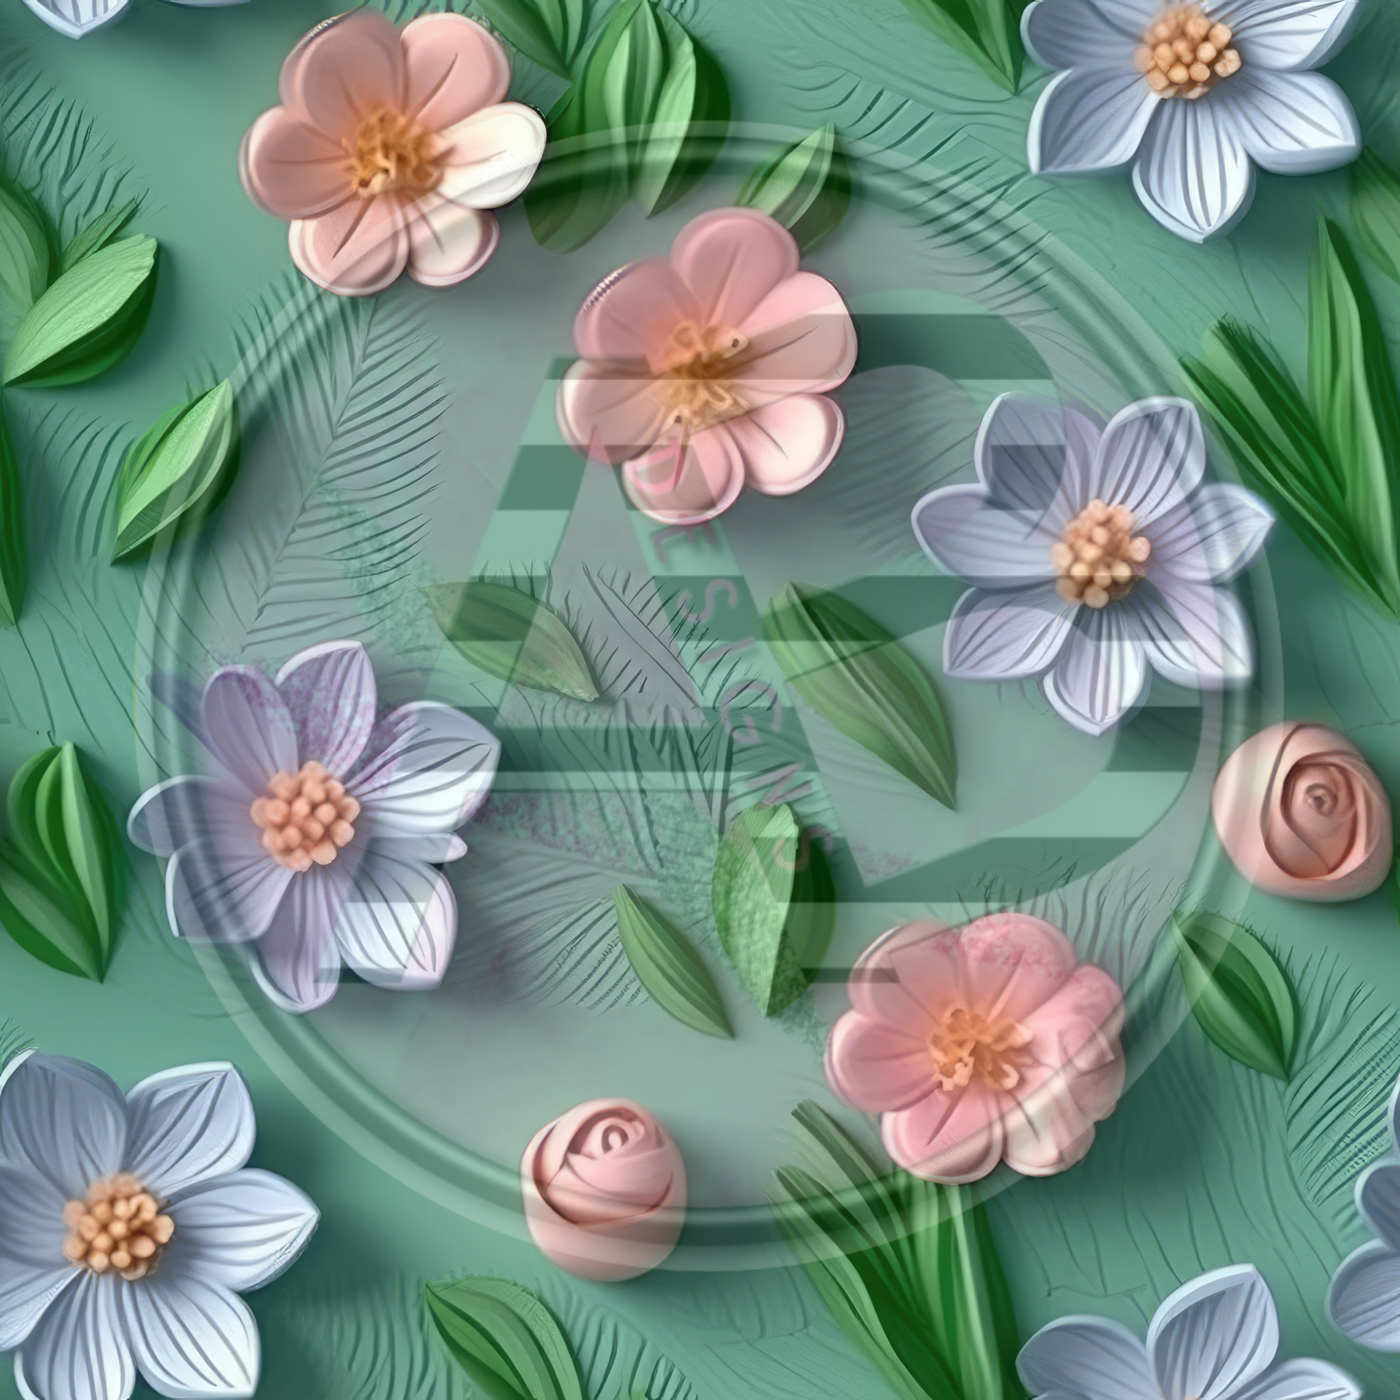 Adhesive Patterned Vinyl - 3D Floral 09